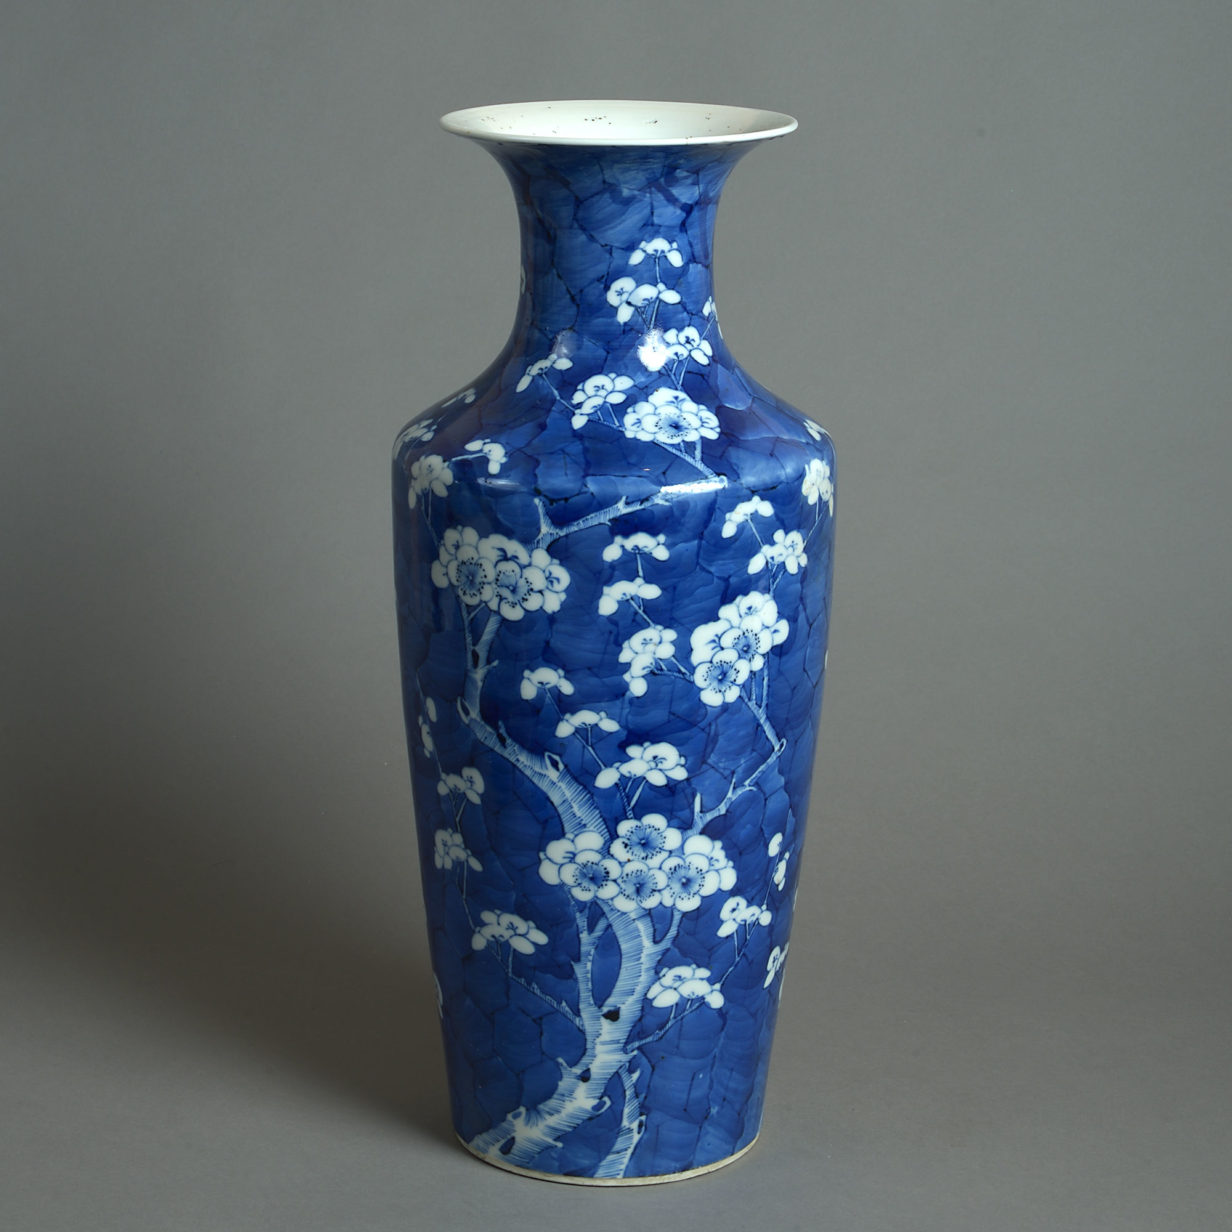 19th century qing dynasty blue & white porcelain vase